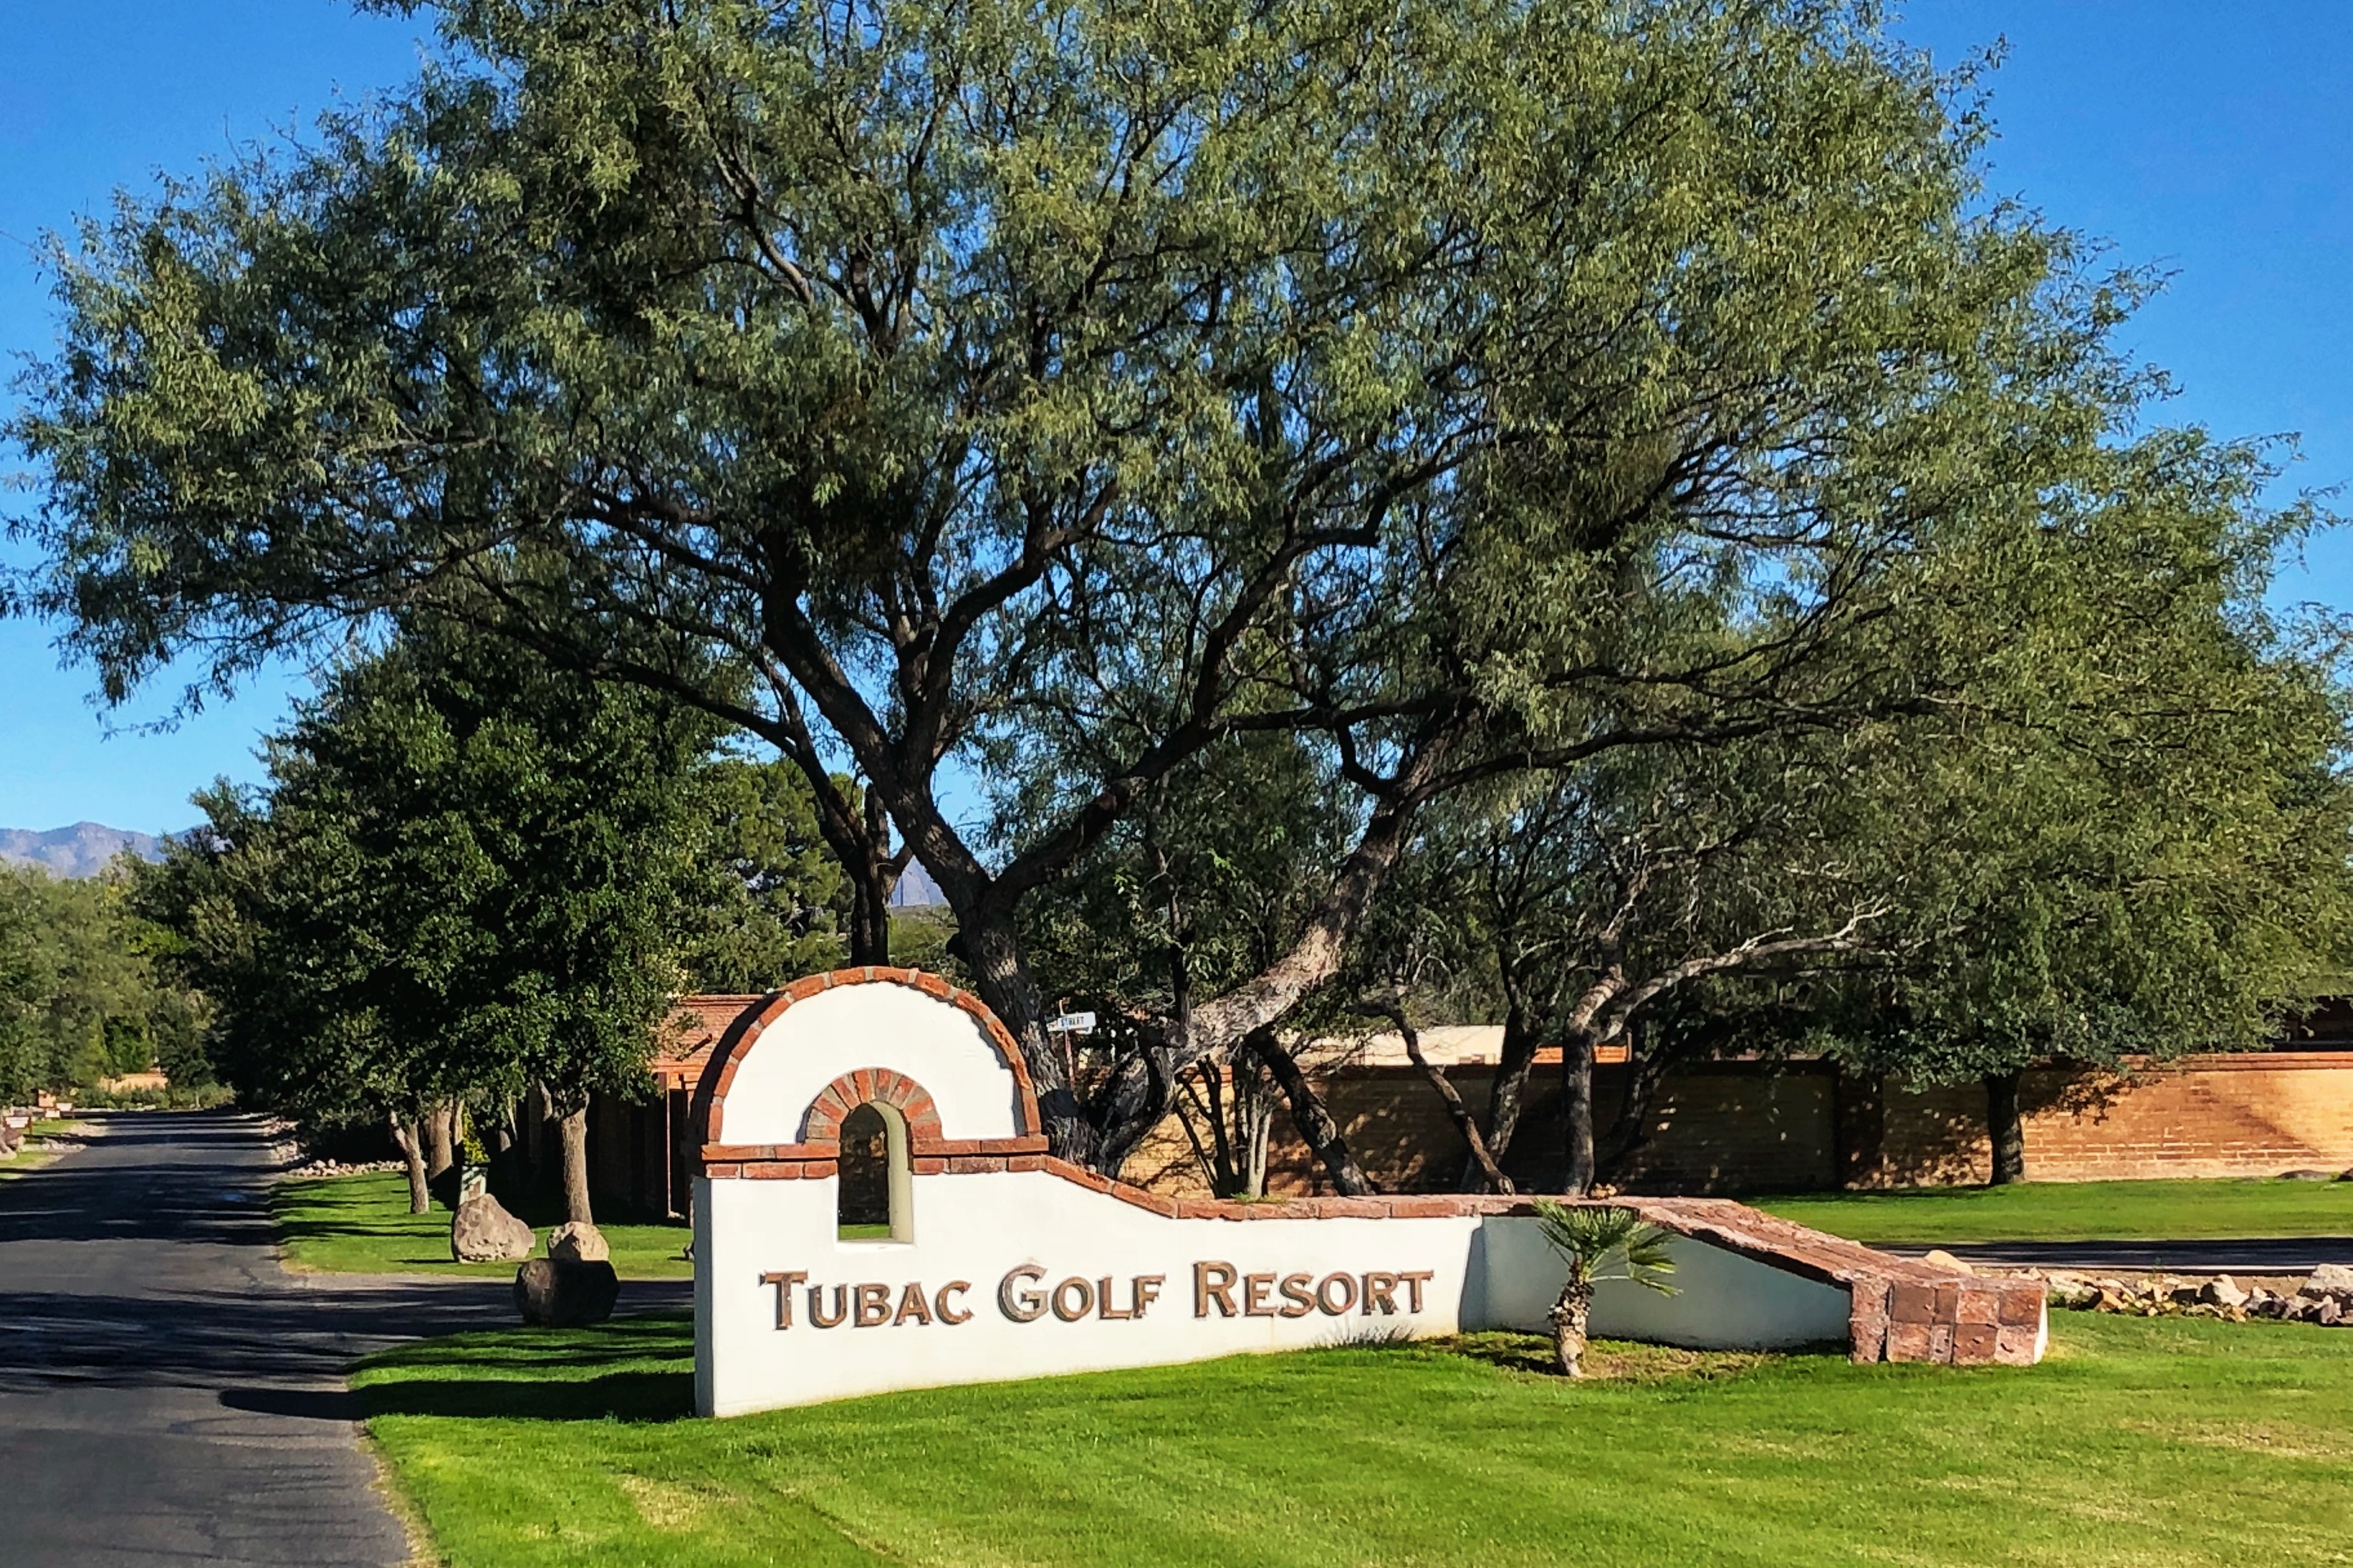 Sign for Tubac Golf Resort